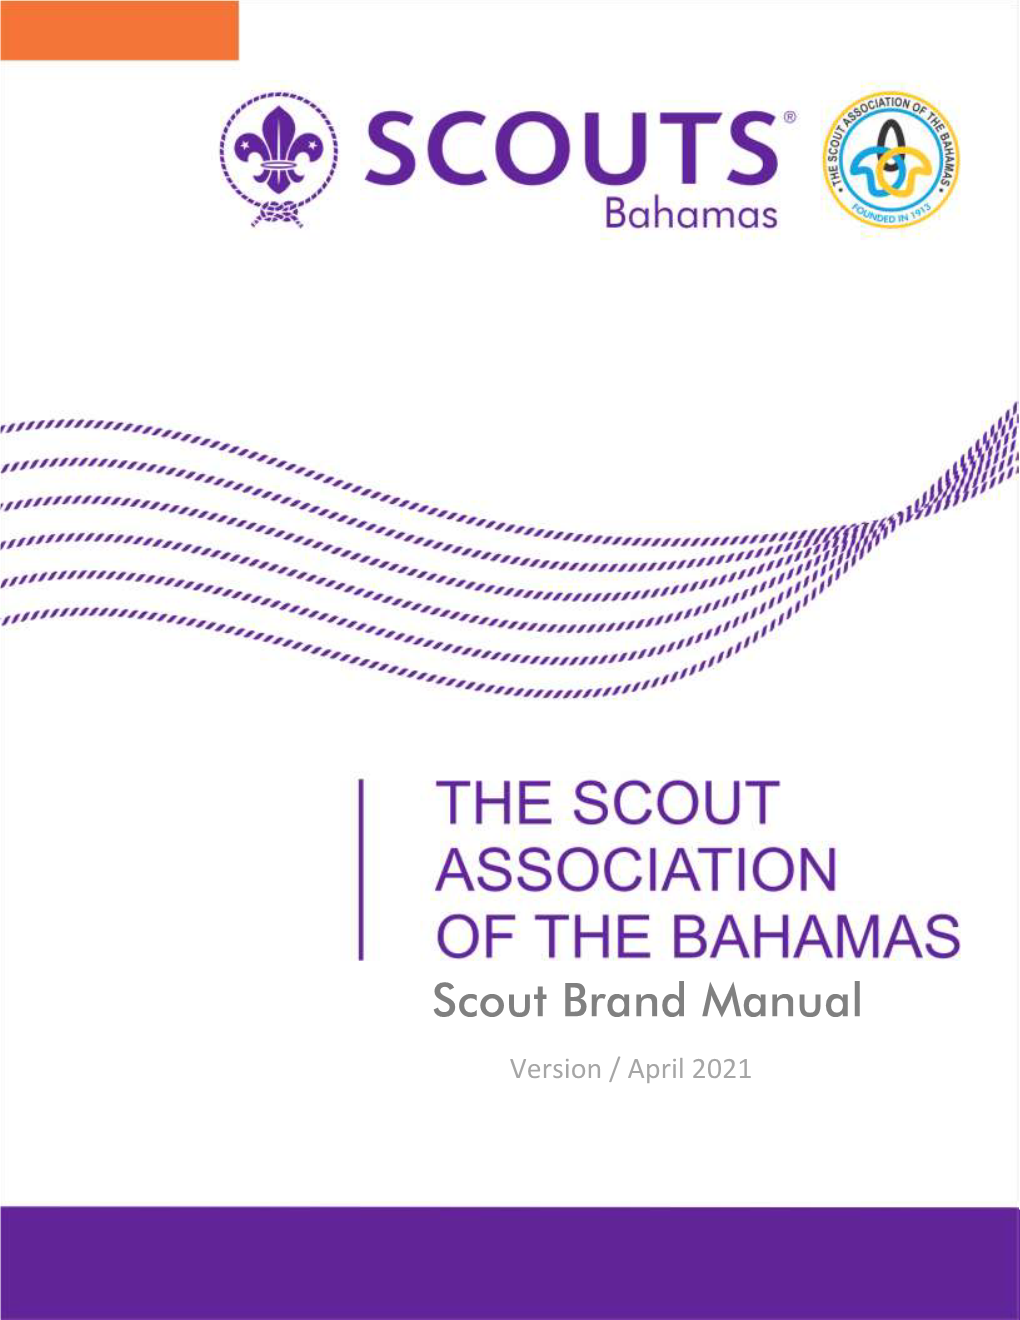 Scout Brand Manual Version / April 2021